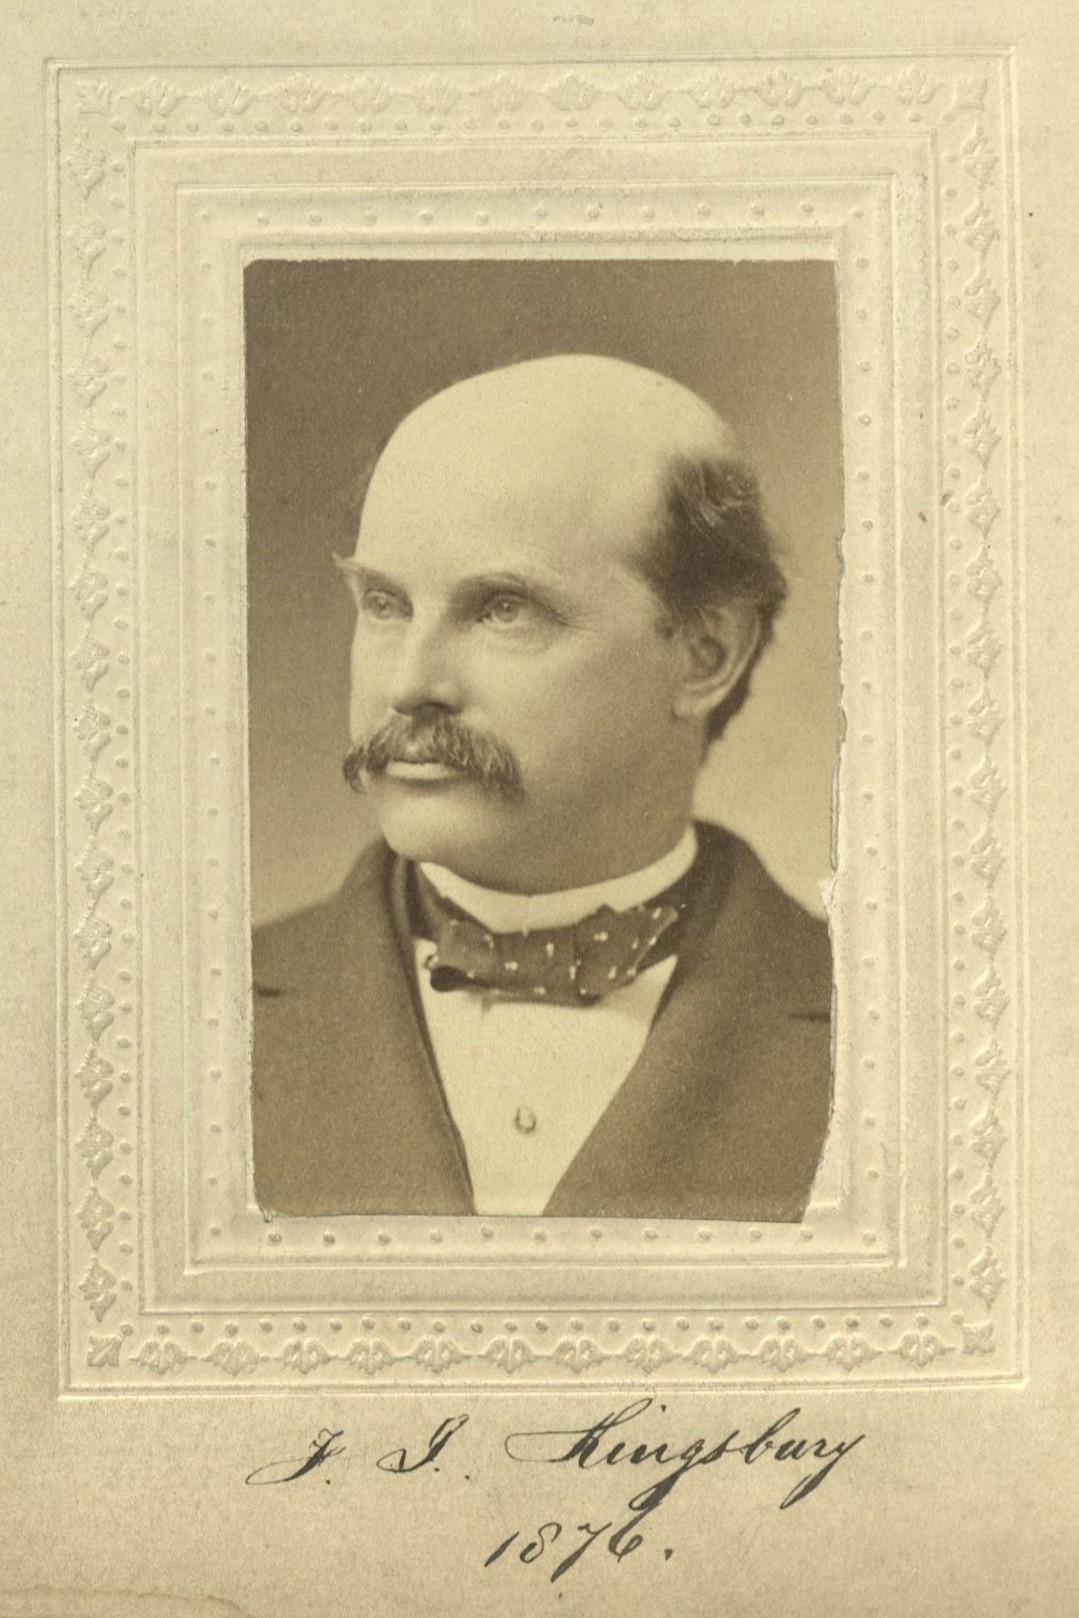 Member portrait of Frederick J. Kingsbury